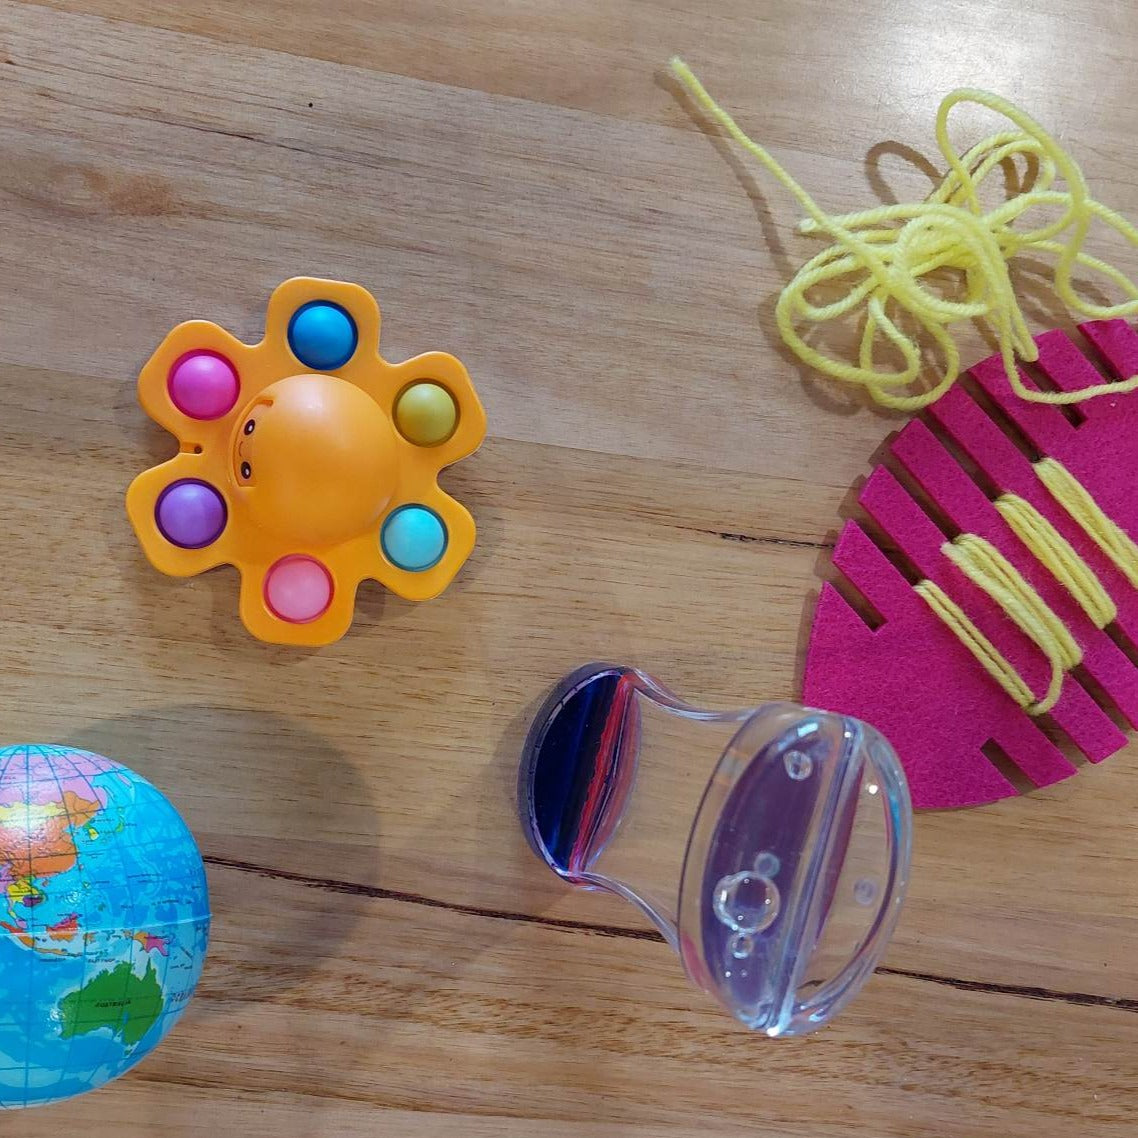 Sensory Kit for Calm Corner - Gel Timer, Fidget Spinner, Wool Fine Motor Felt Fish, Soft Ball. Tools for relaxation and engagement, ideal for educators and children